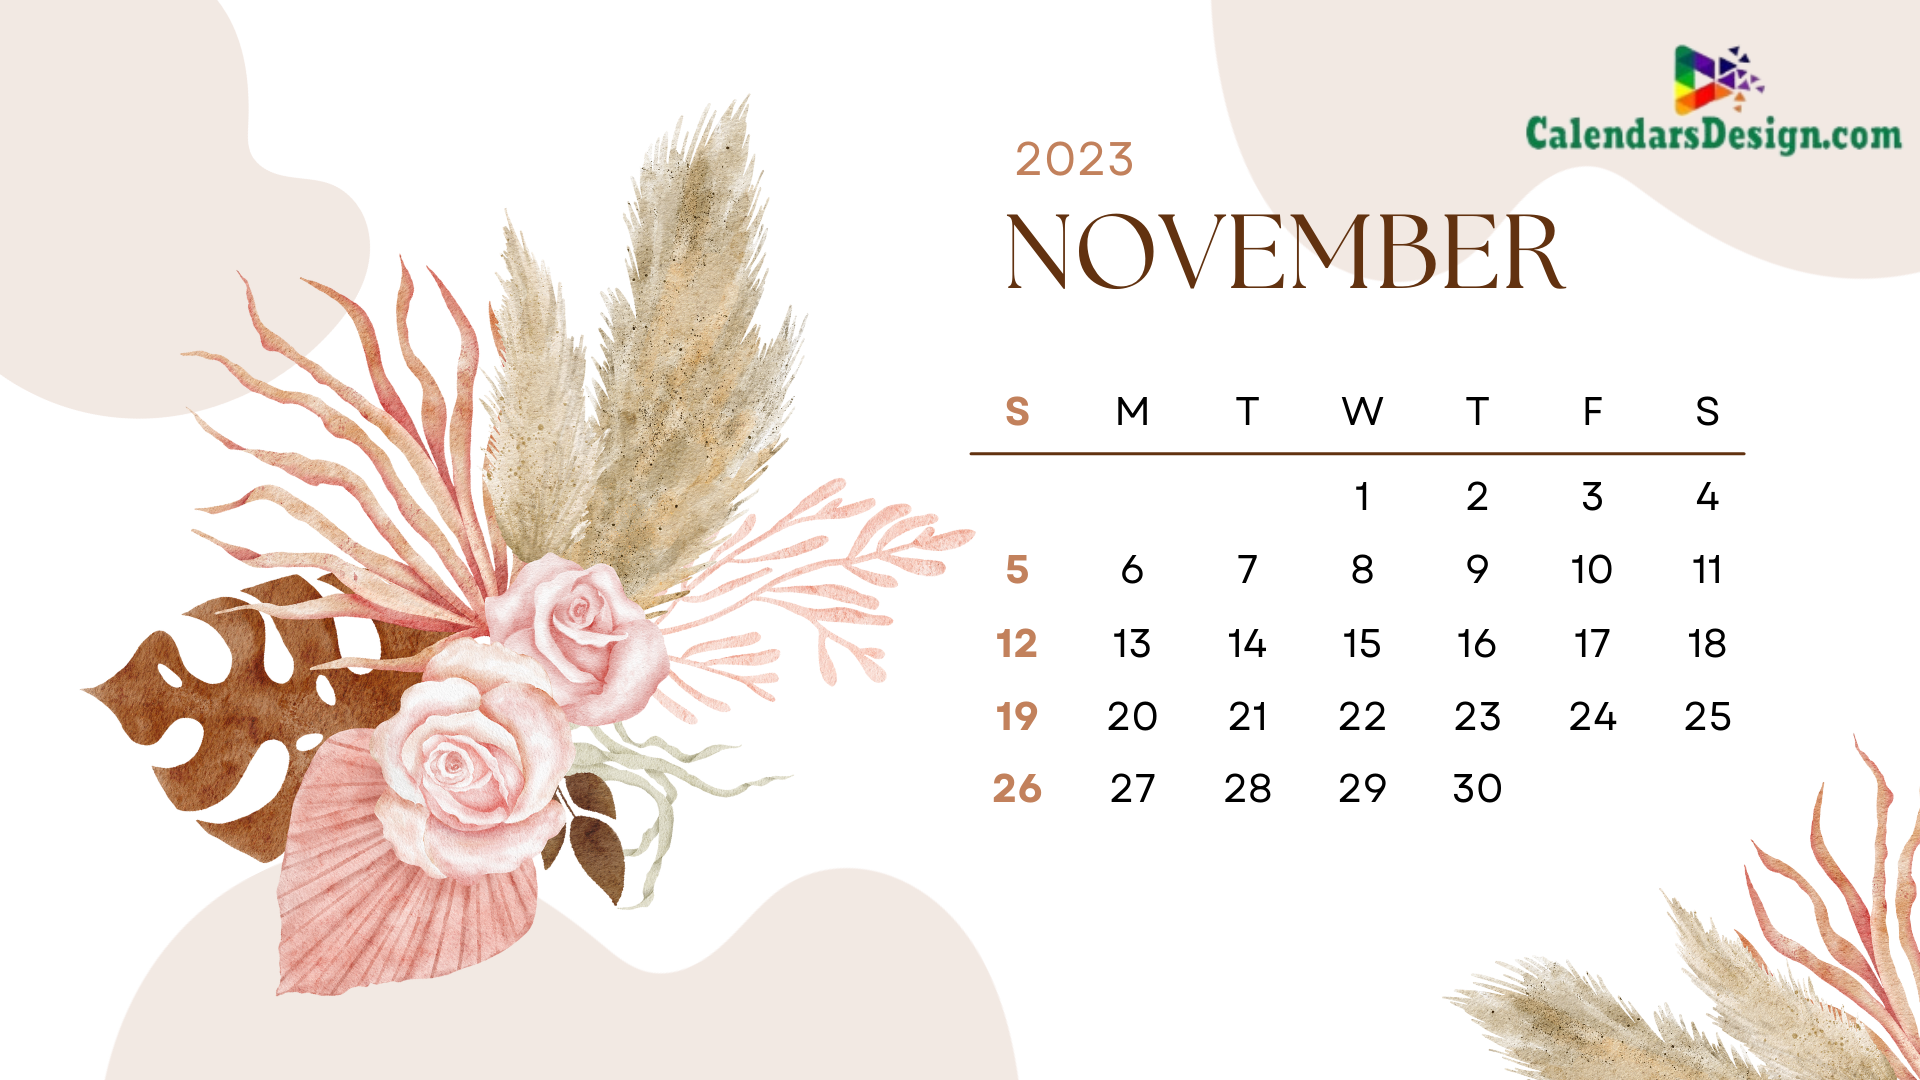 Latest November 2023 Wall Calendar